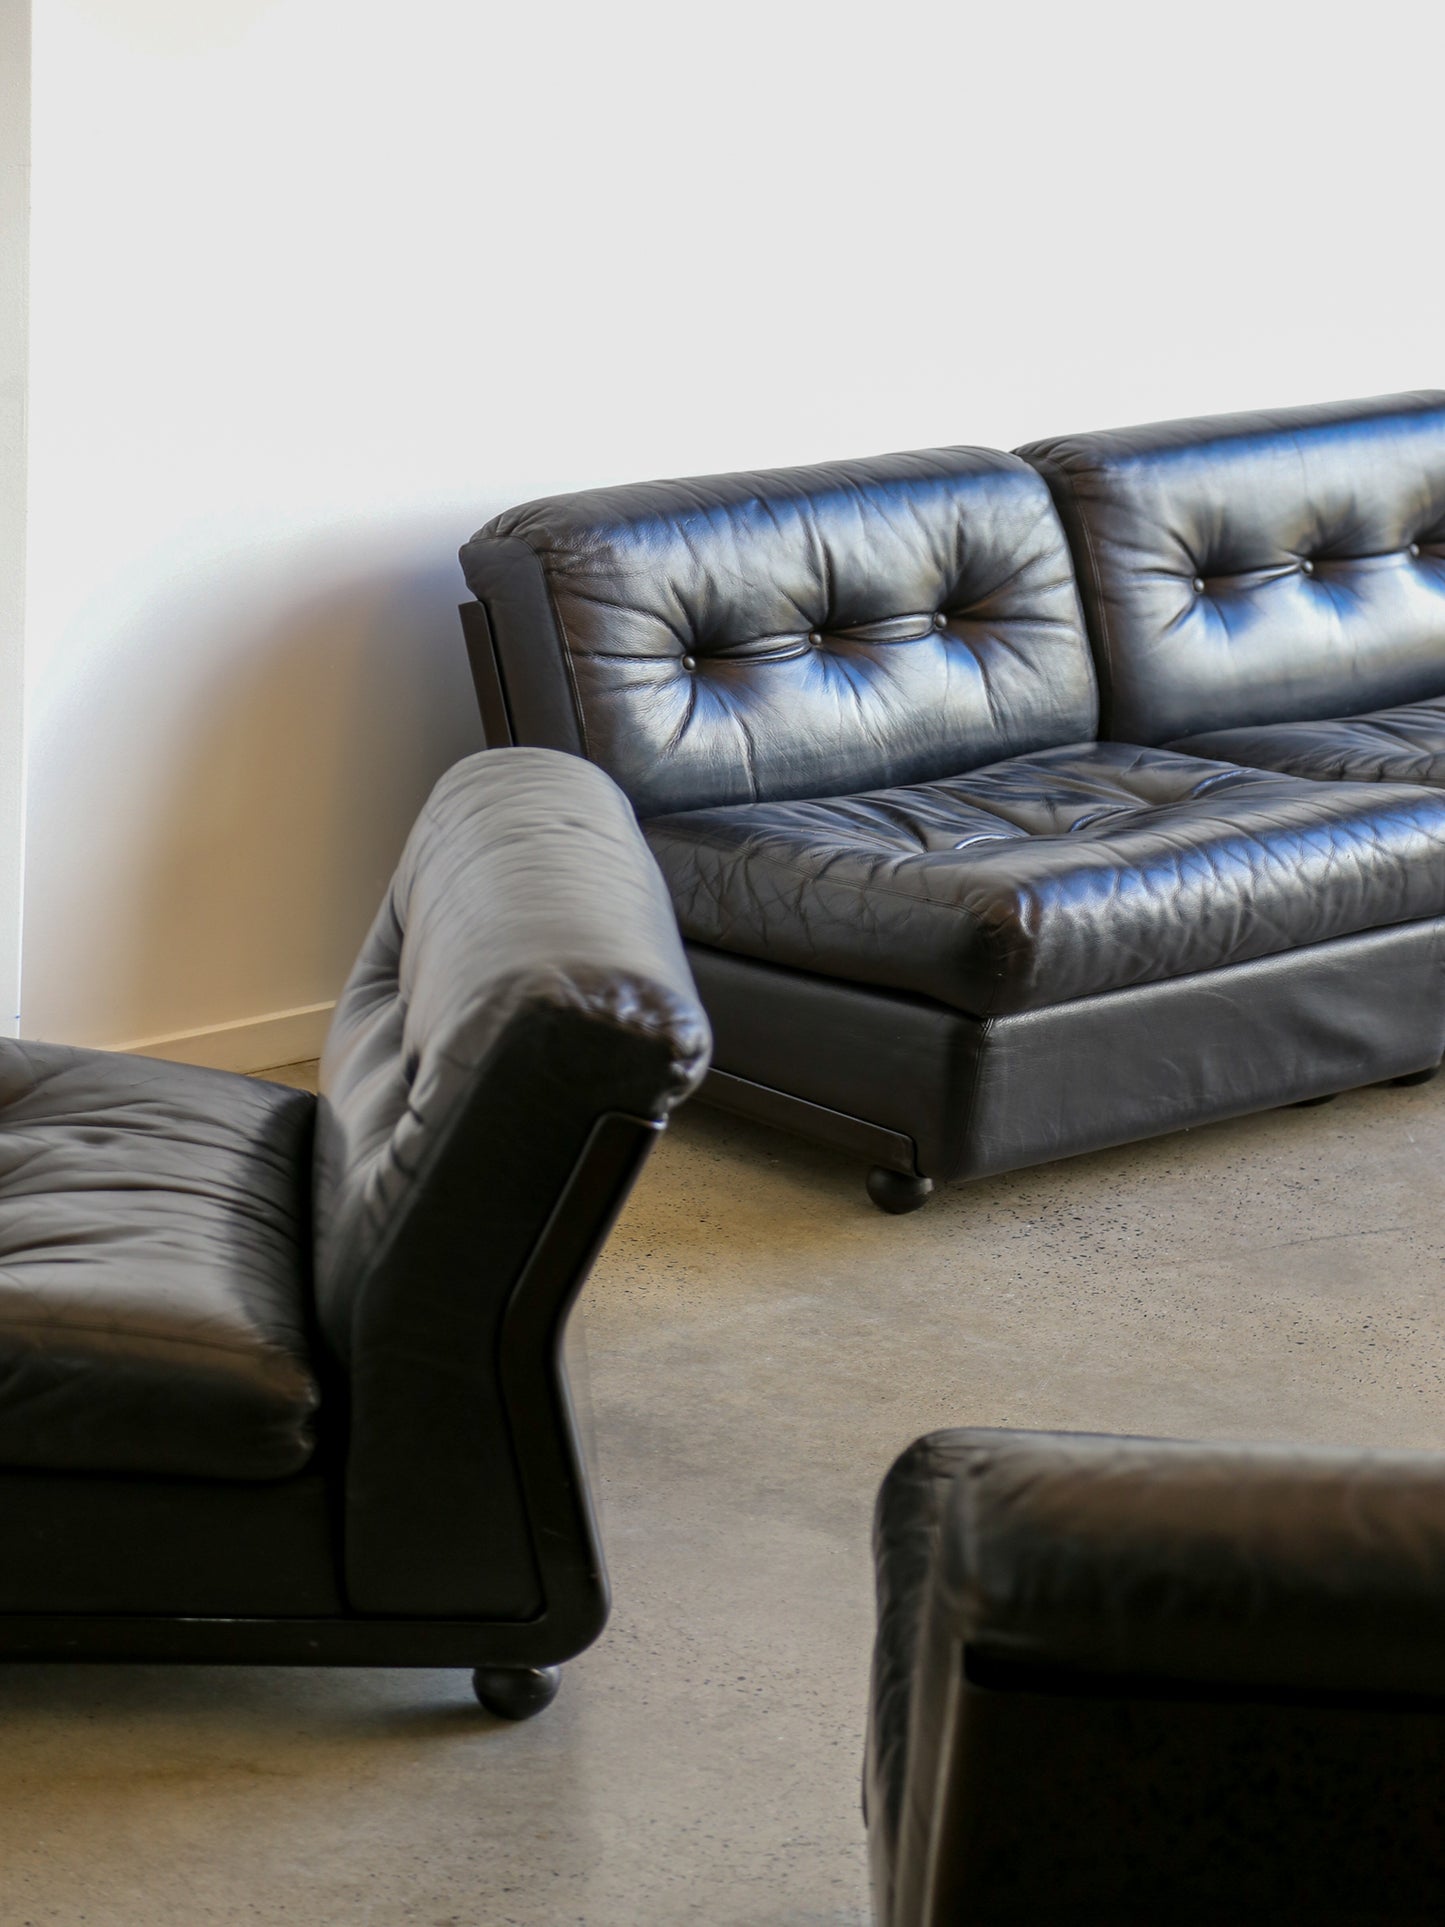 Amanta Modular Sofa in Black Leather By Mario Bellini for B&B Italia 1970